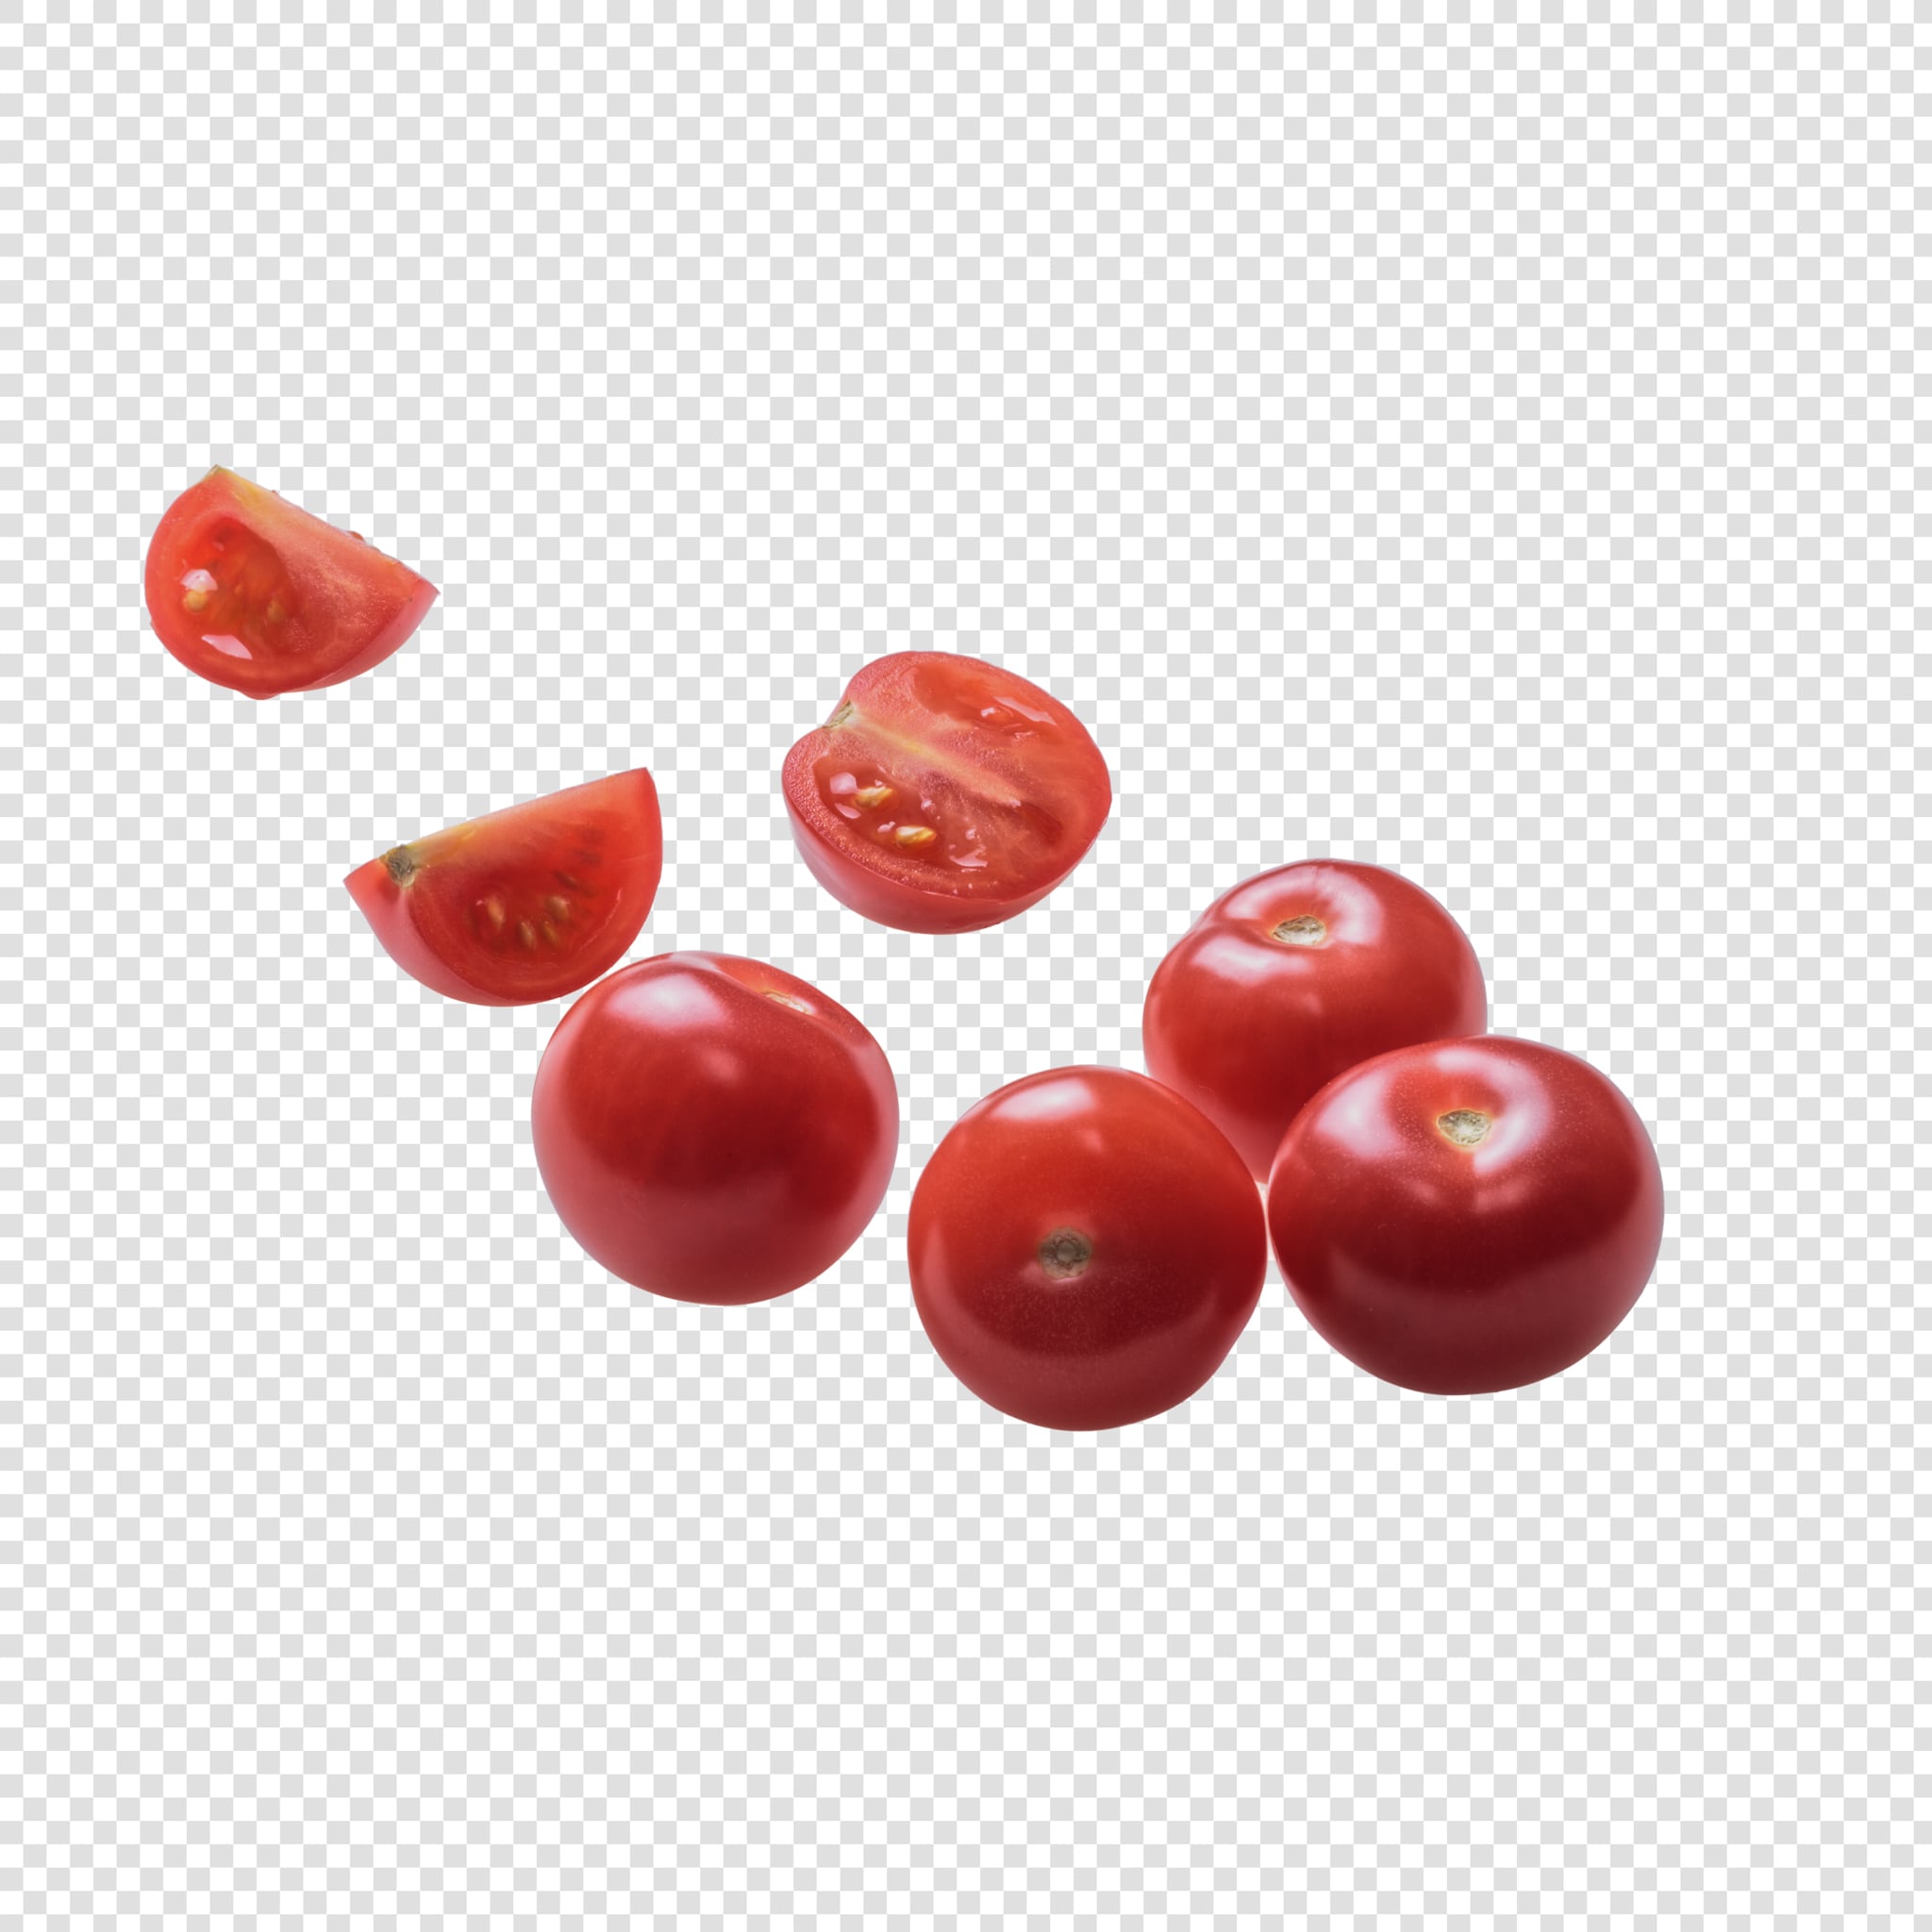 Tomato PSD isolated image